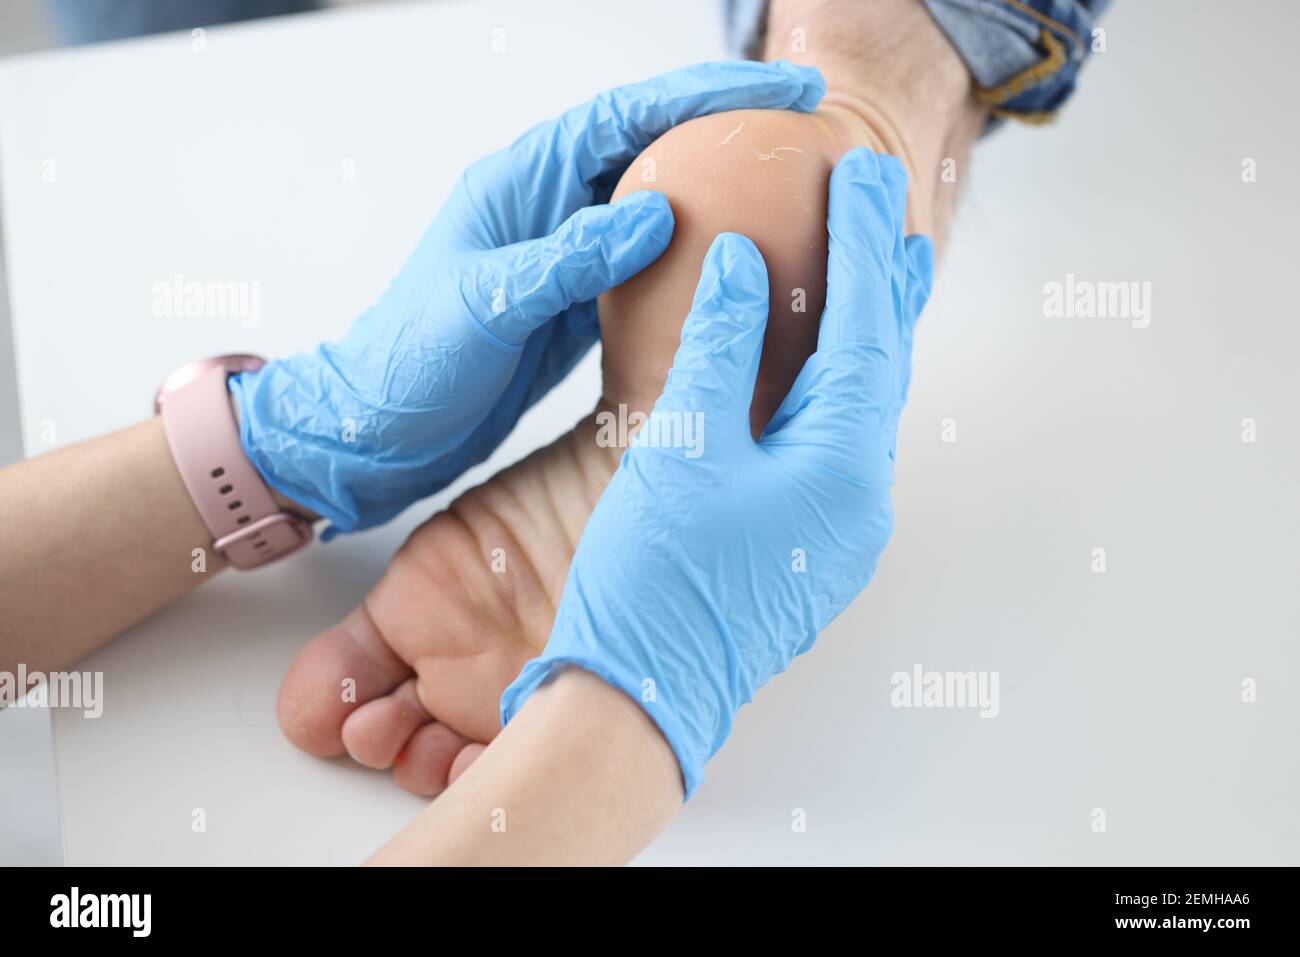 Doctor dermatologist in gloves examining patients heel closeup Stock Photo